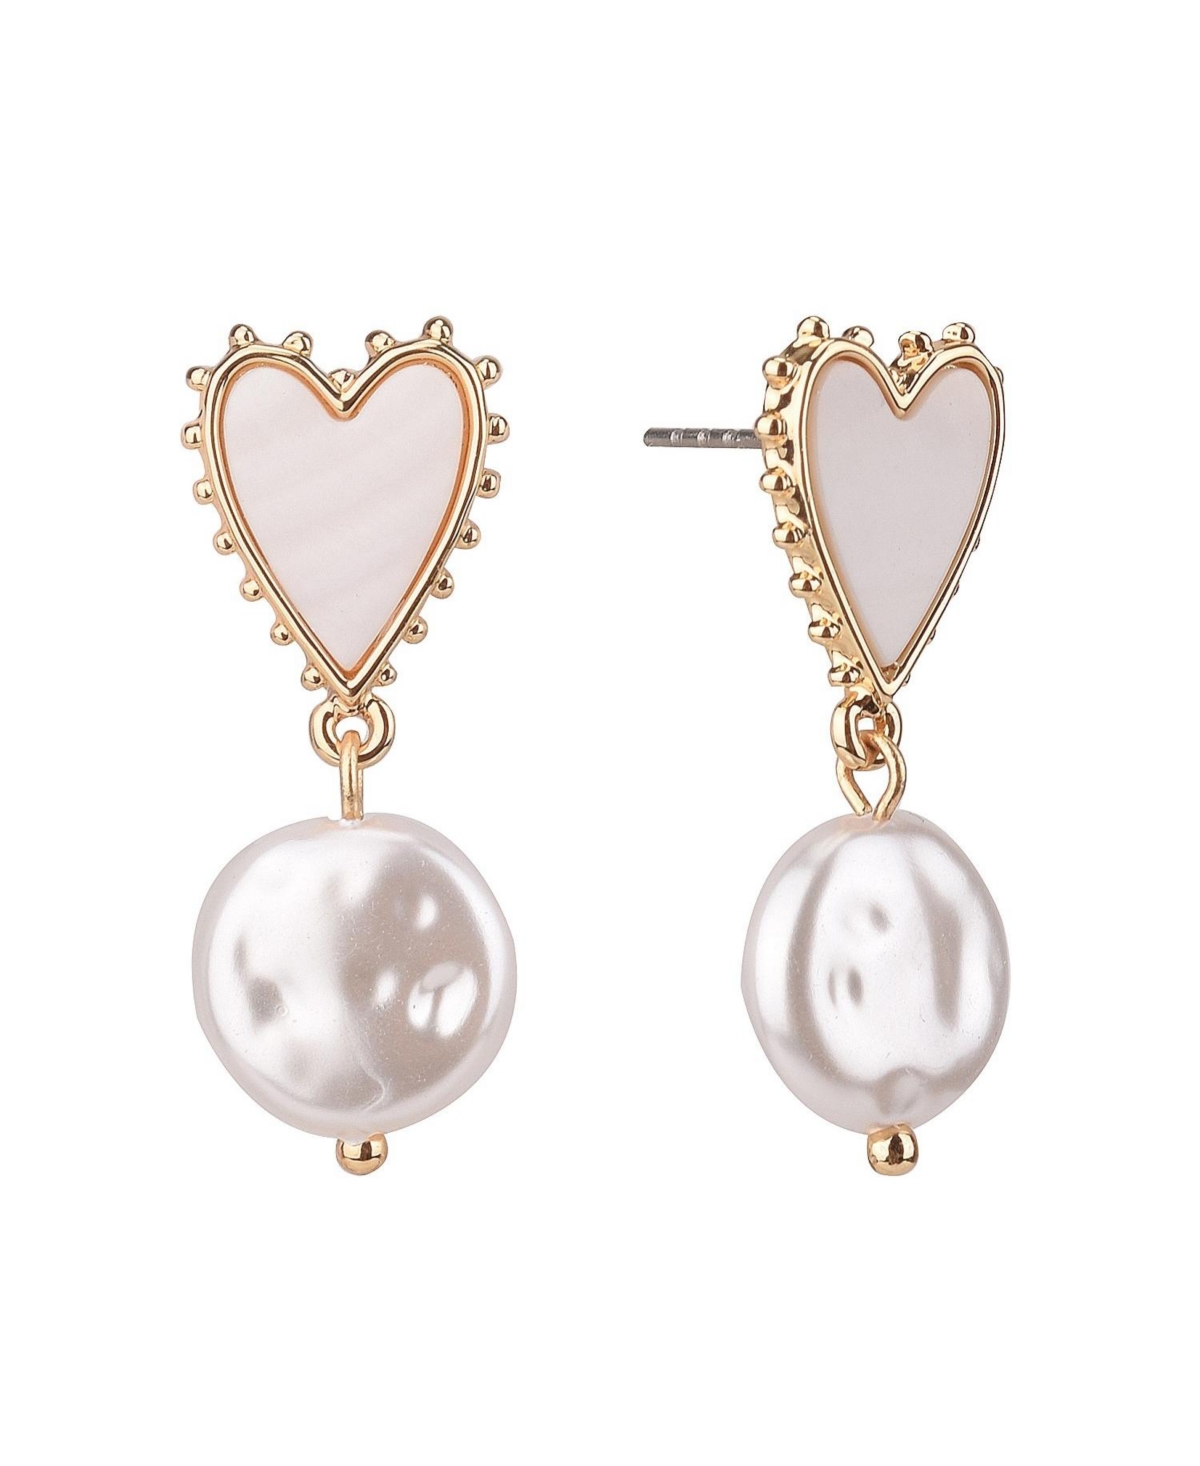 Mop Heart Earrings with Pearl Drop - White